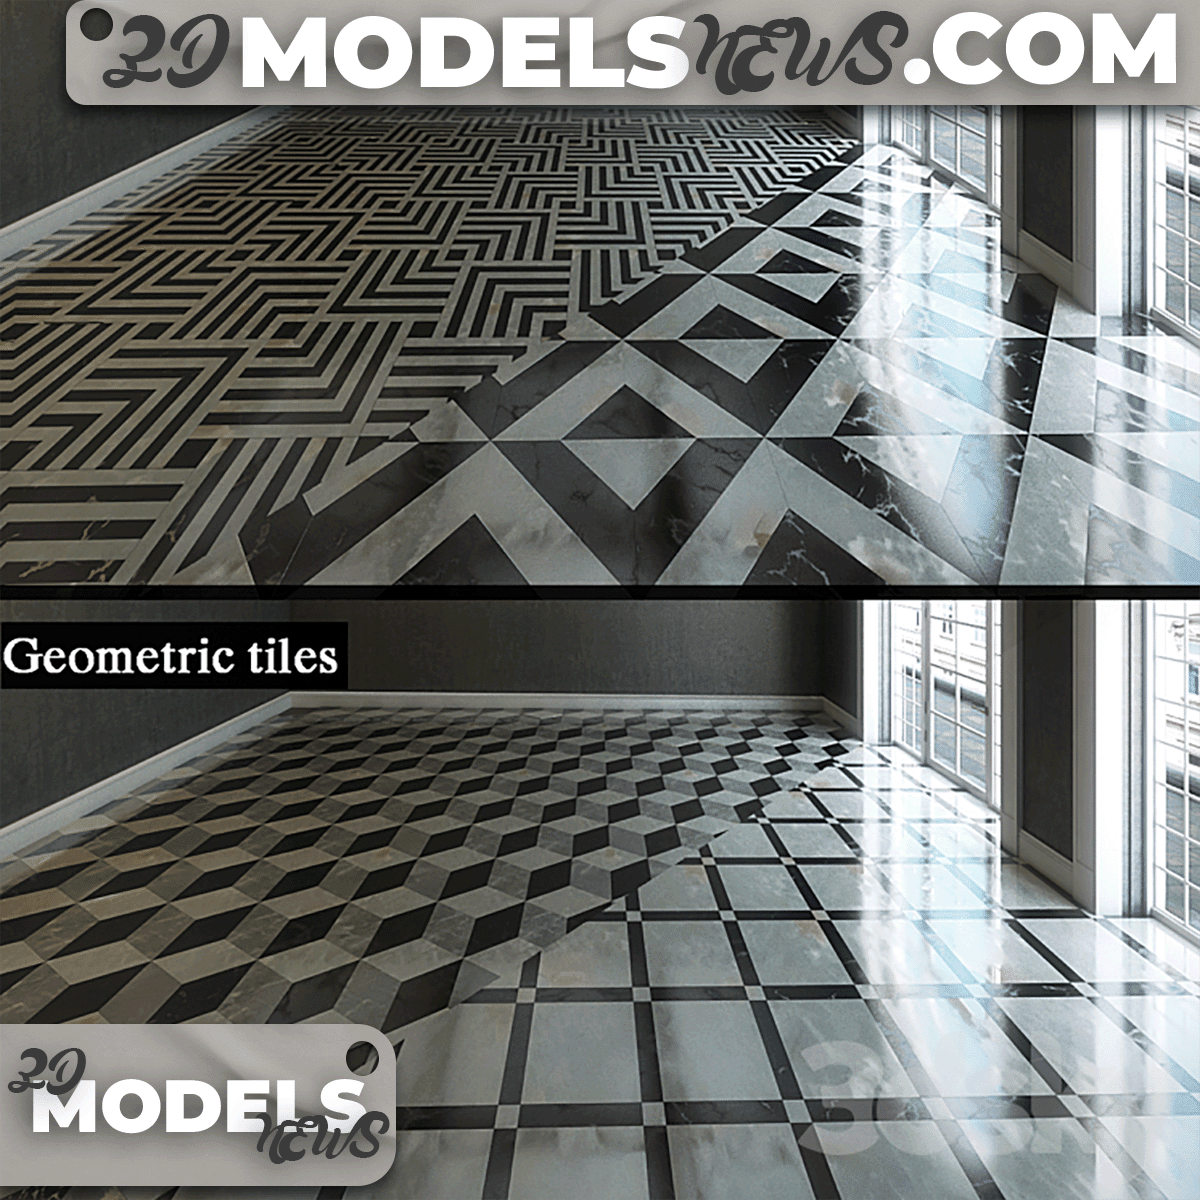 Geometric Tile Model 1